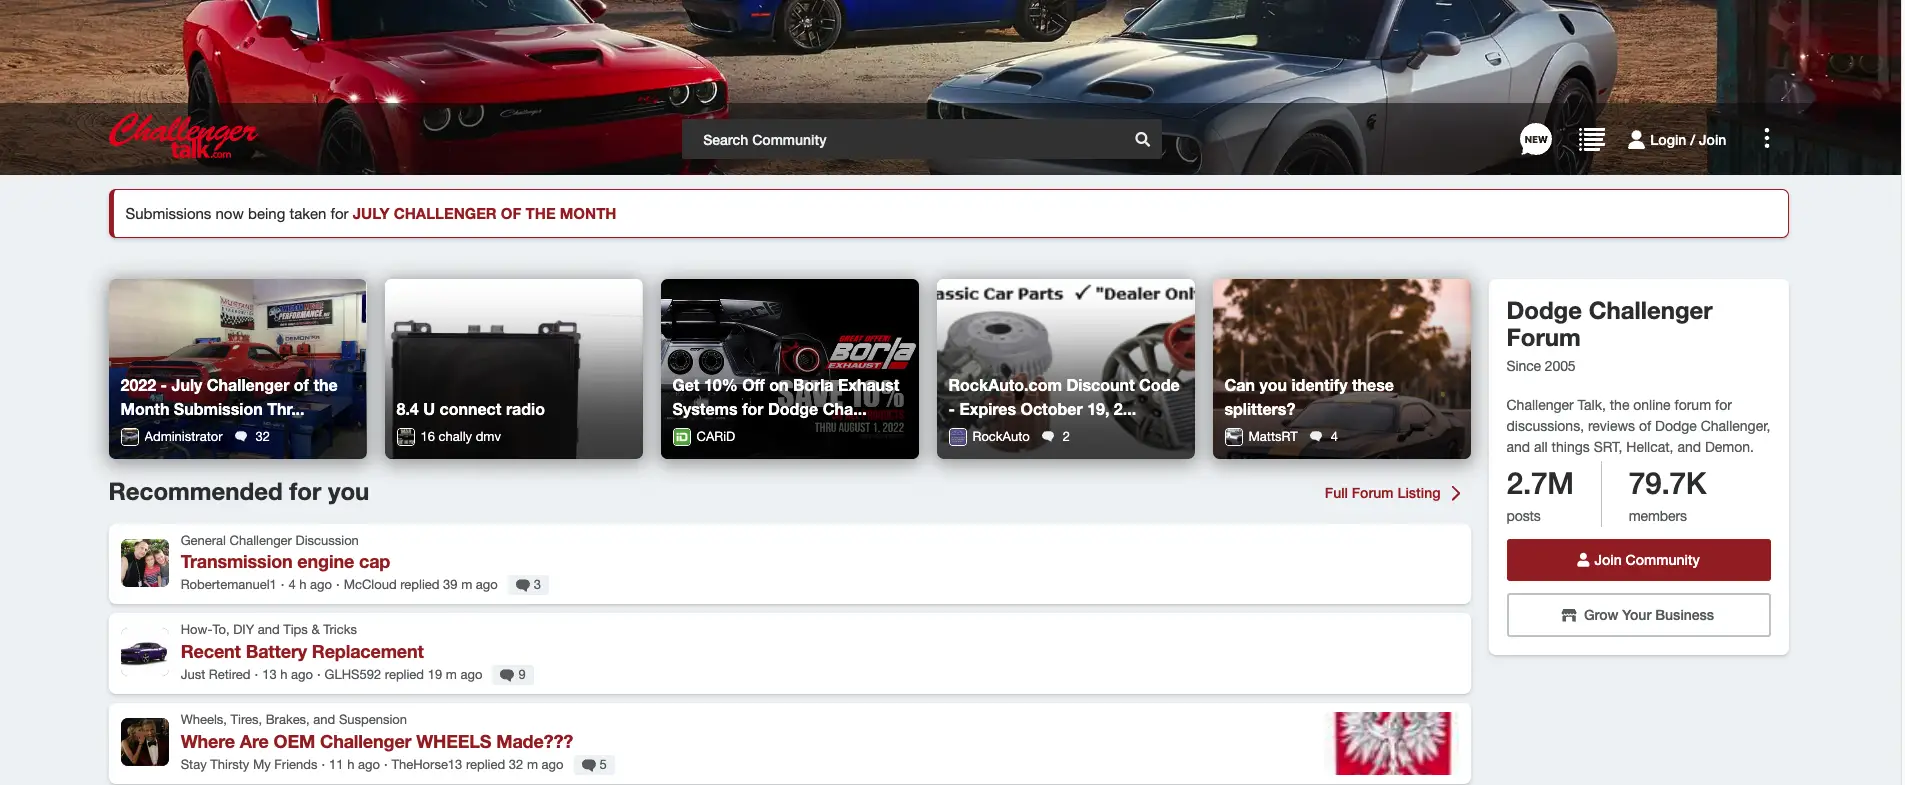 Dodge Challenger Talk Website